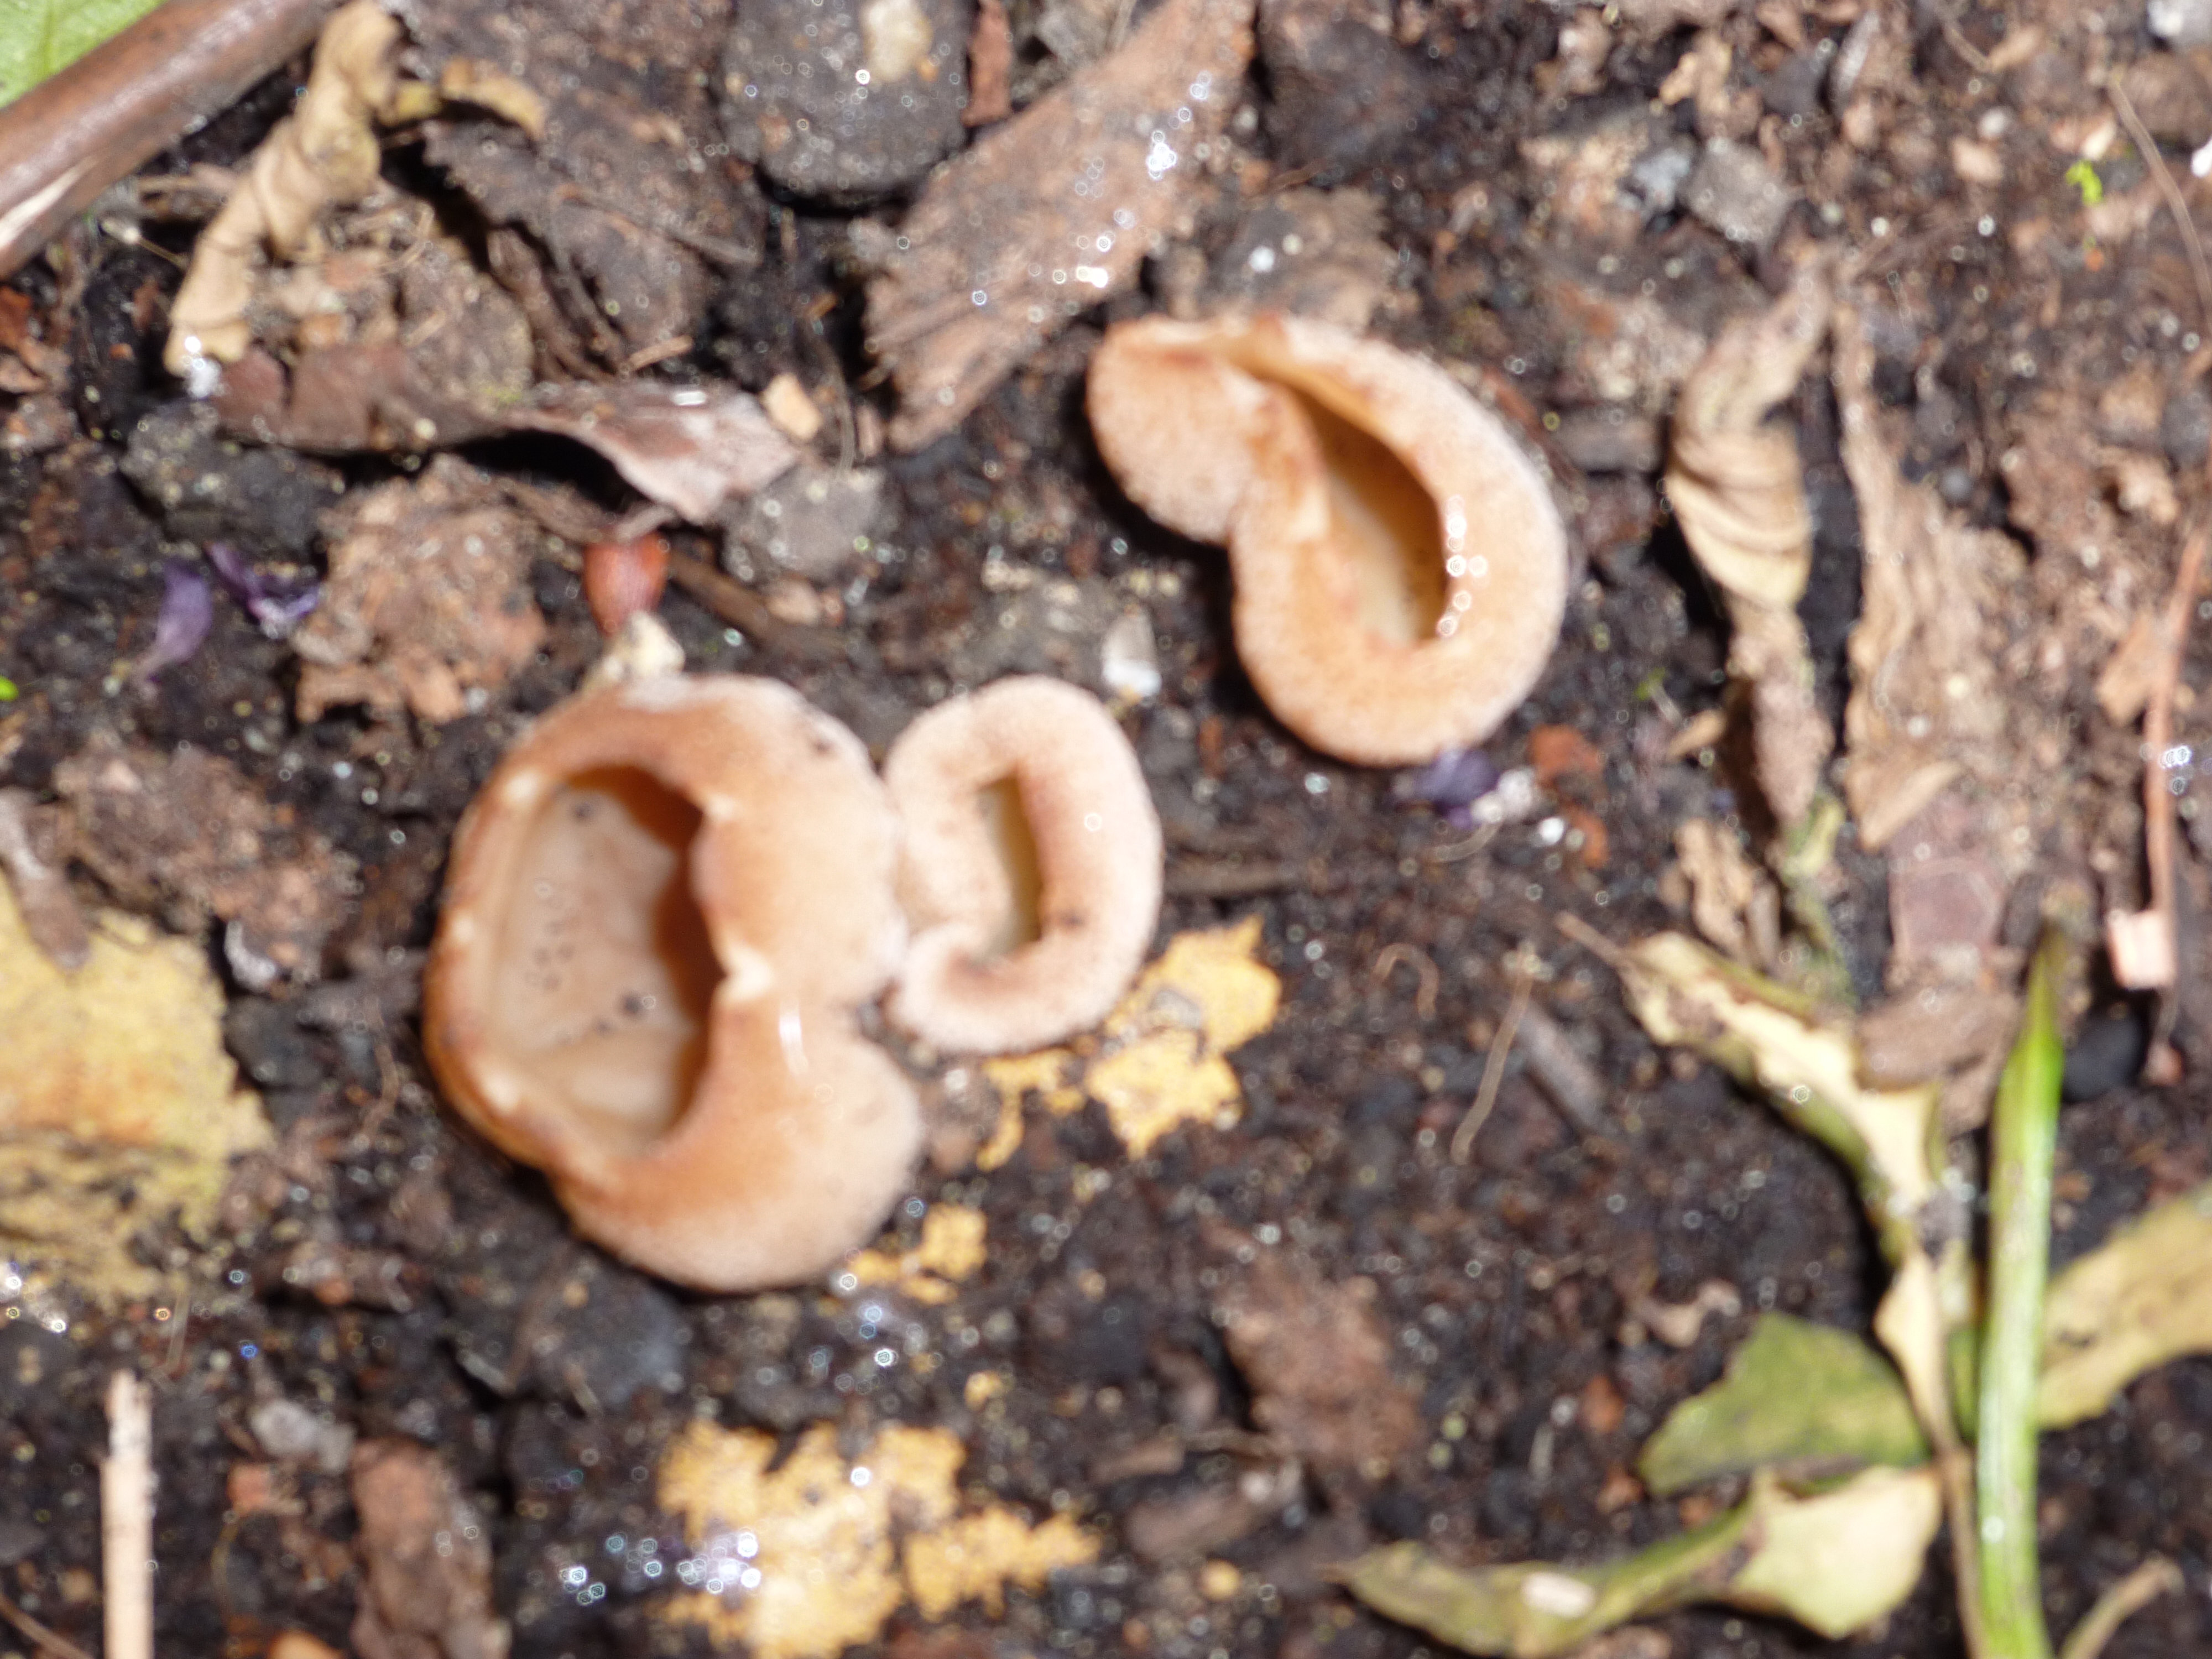 NaturePlus: Weird Fungus - Identification